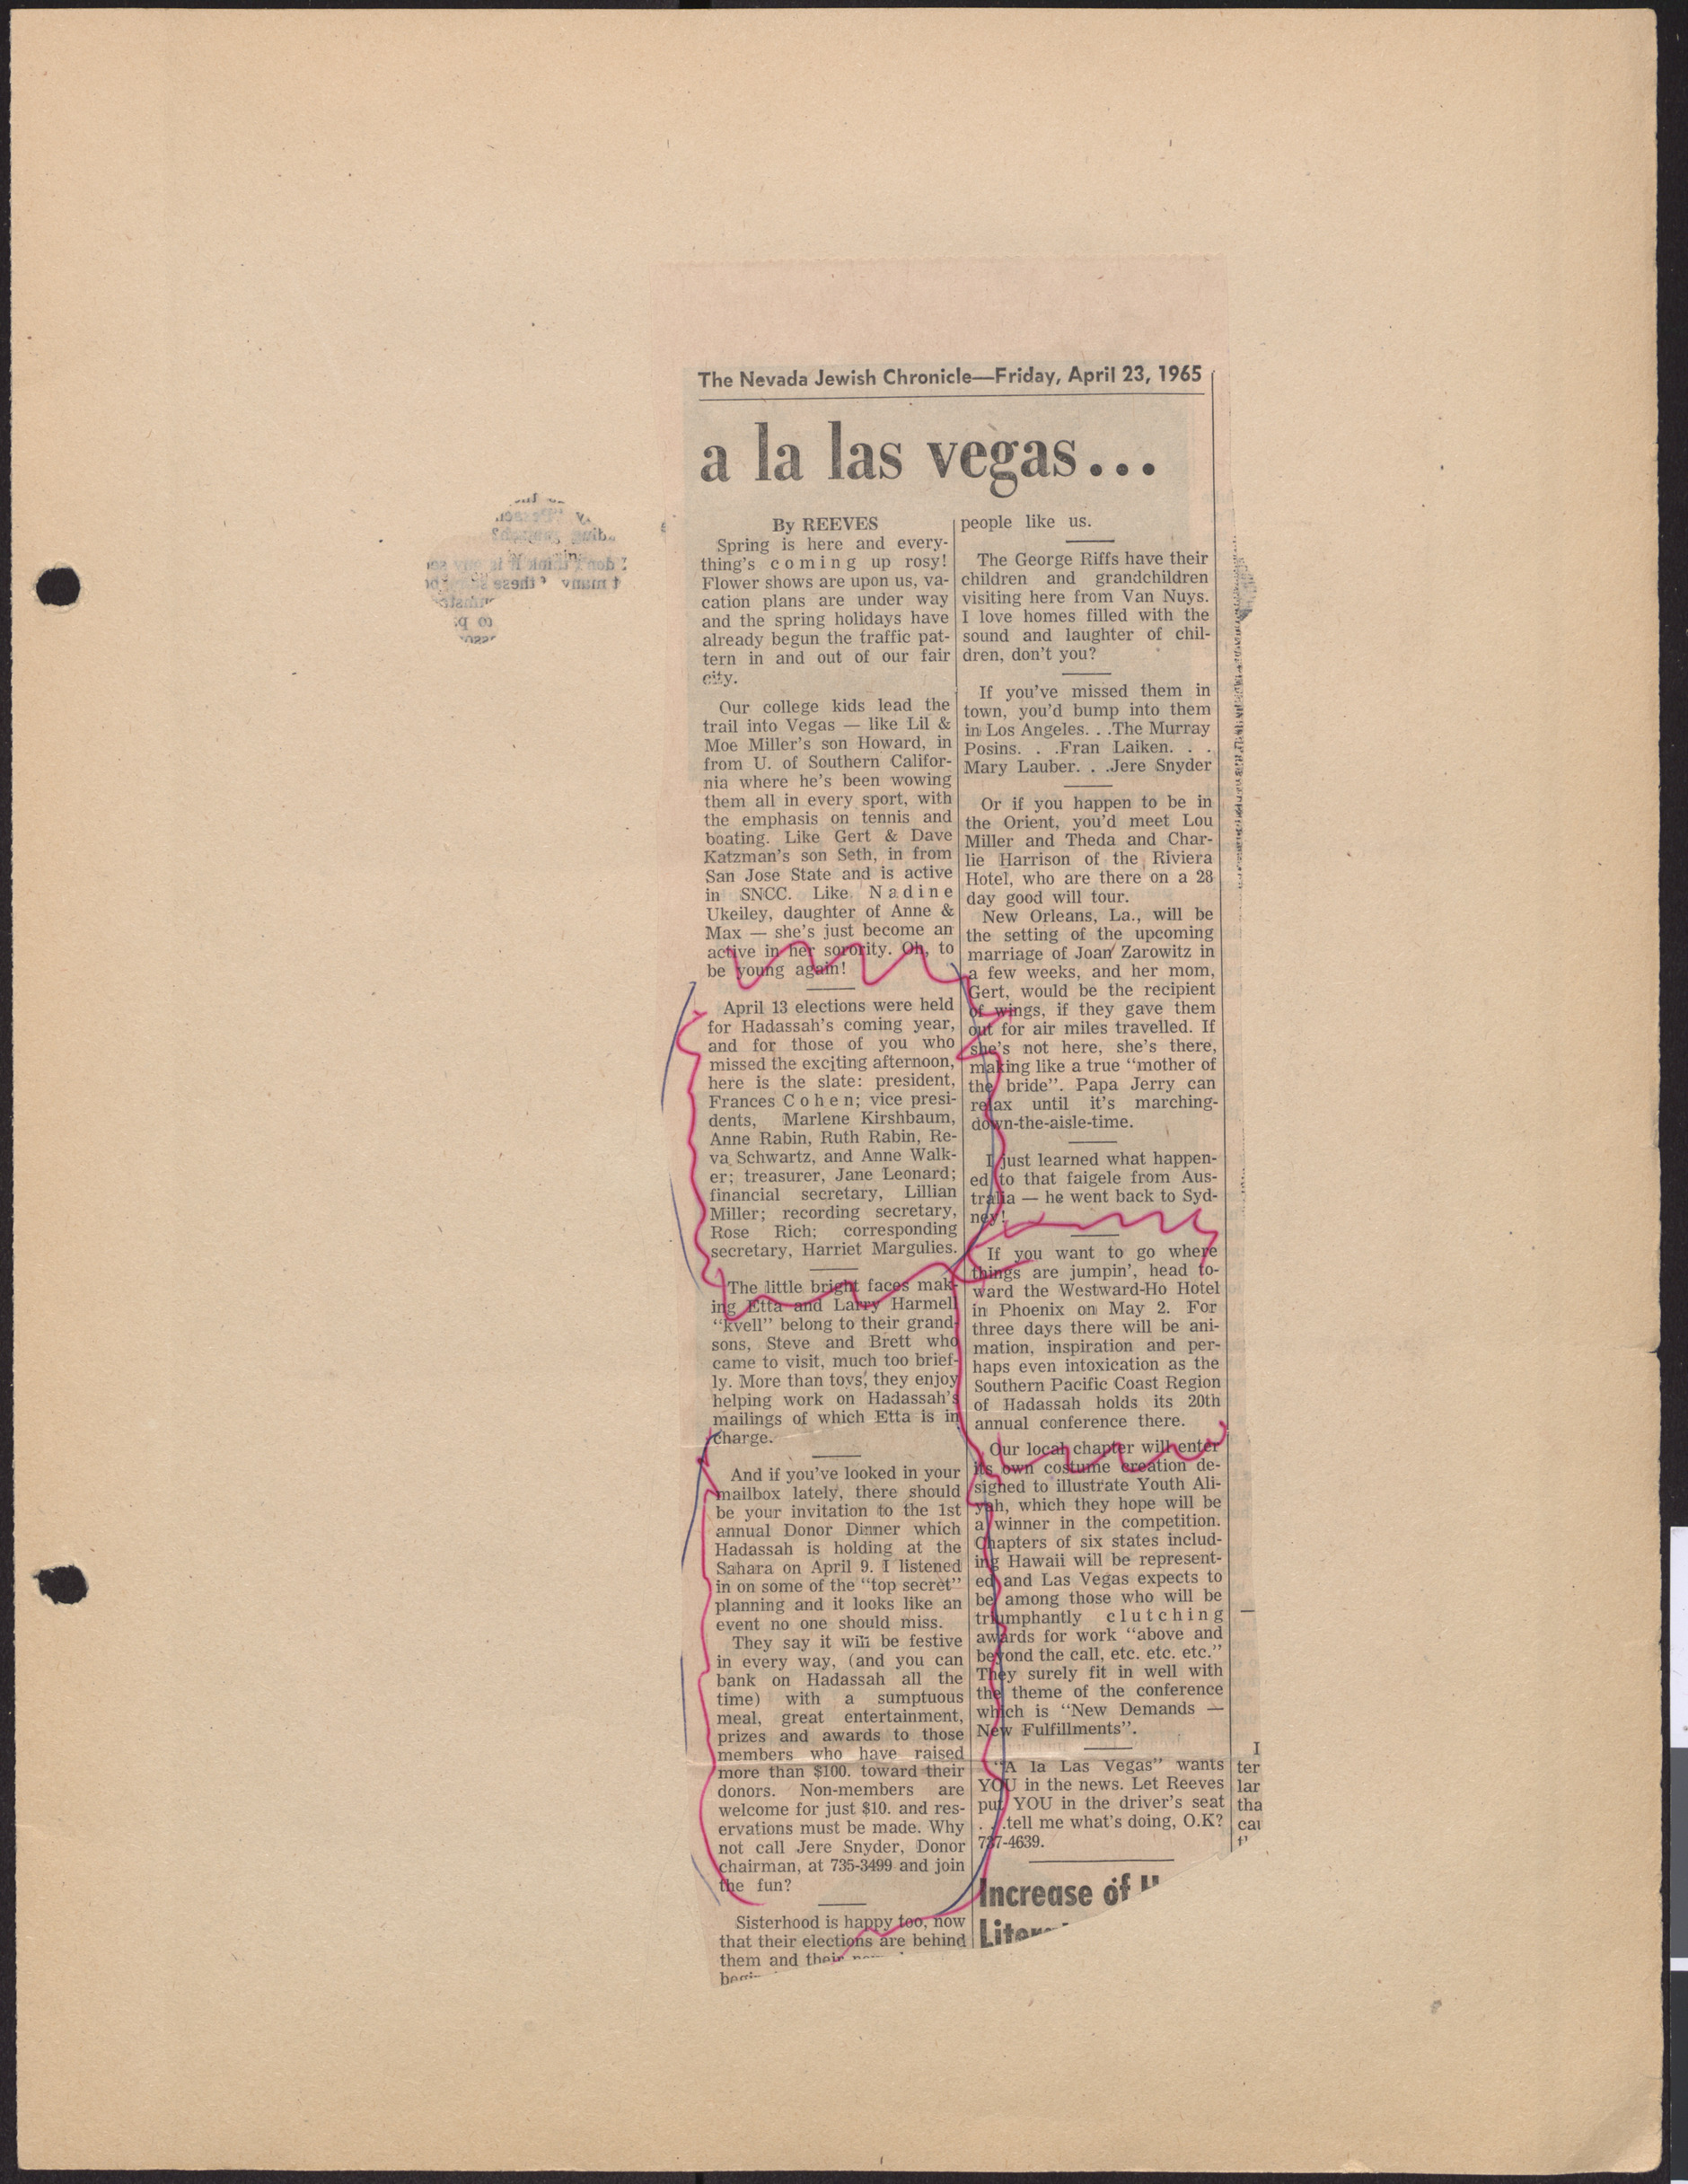 Newspaper clipping, a la las vegas..., The Nevada Jewish Chronicle, April 23, 1965